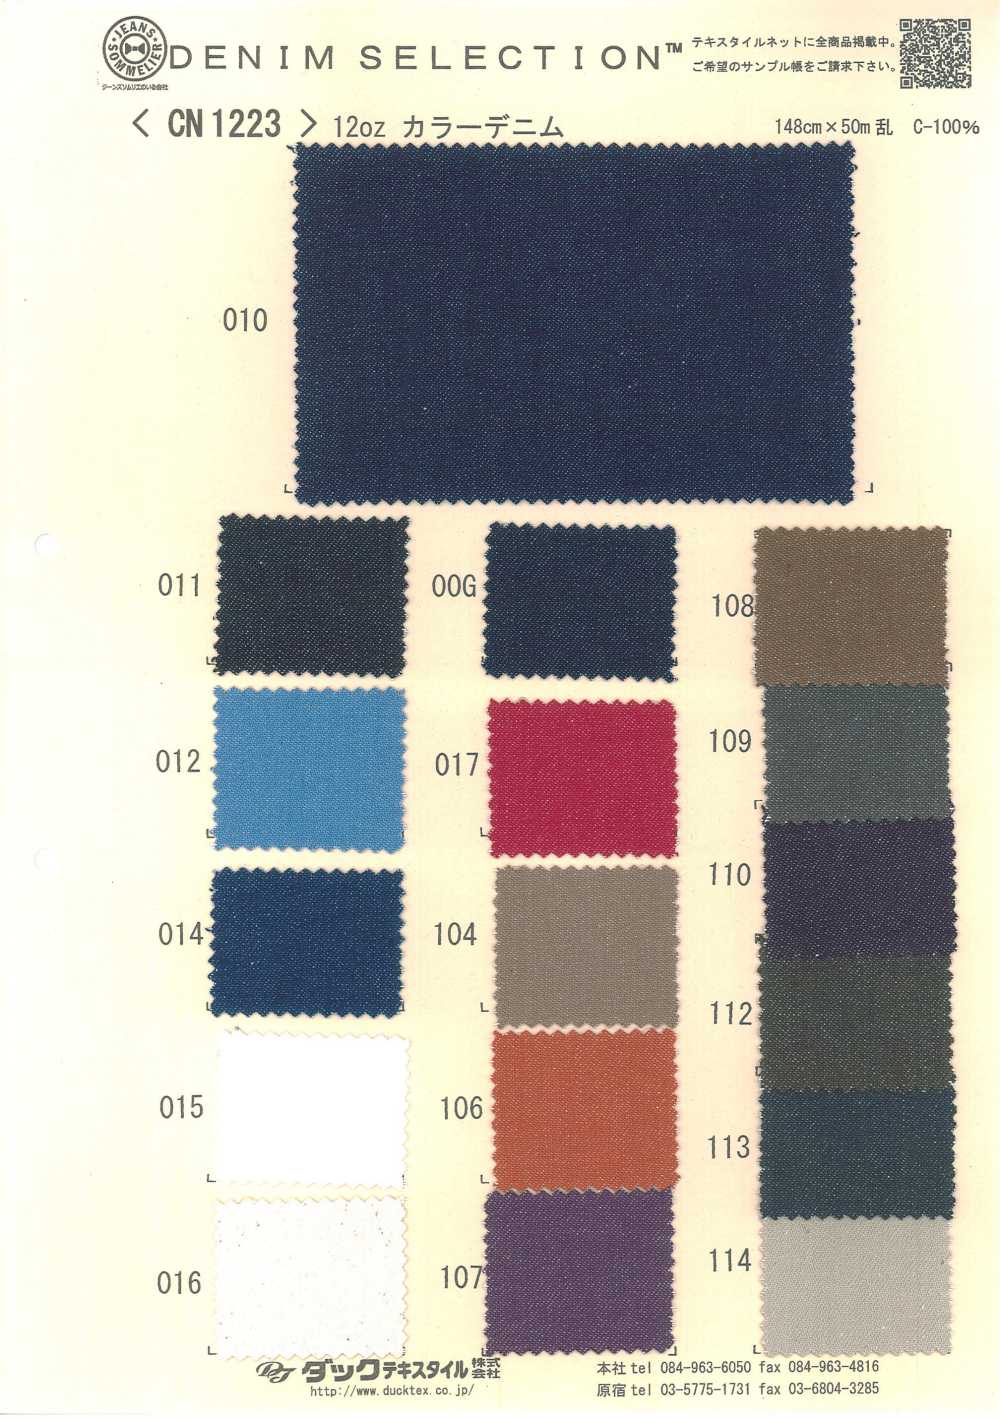 CN1223 12 Unzen Farbdenim[Textilgewebe] DUCK TEXTILE